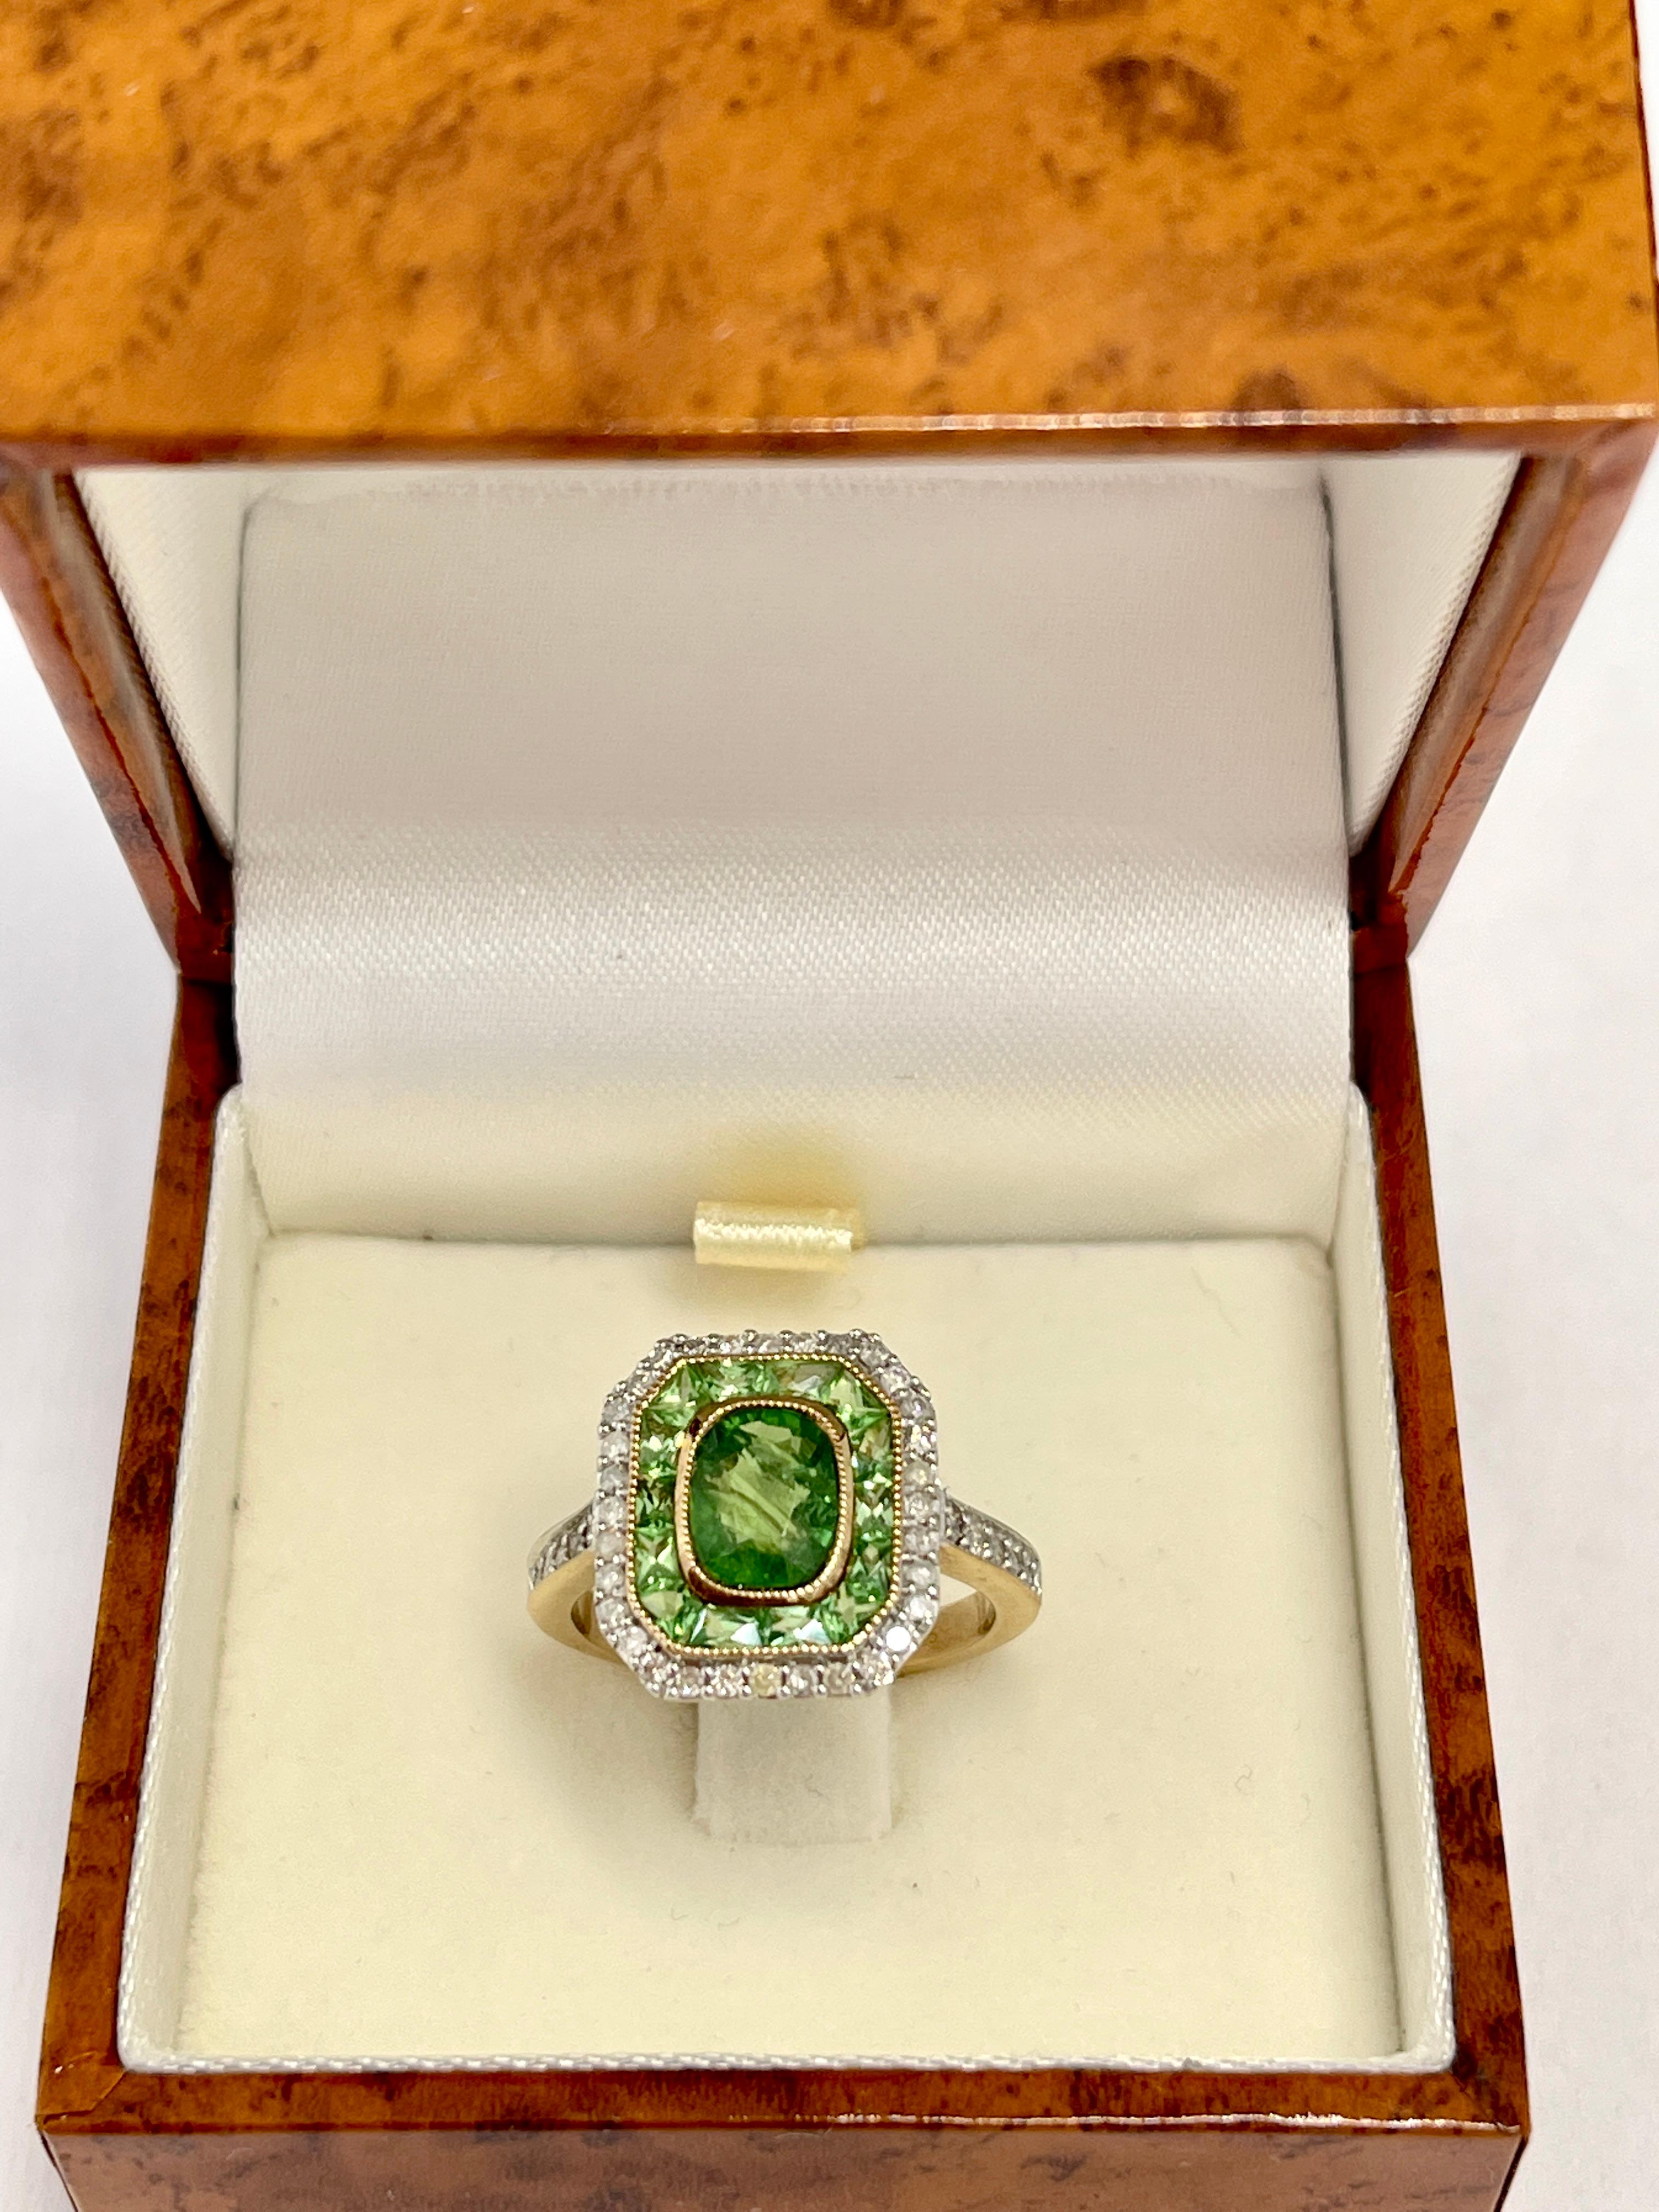 Oval Cut Rare Natural 1ct Carat Tsavorite Garnet Diamond Ring Art Deco Style 9ct Gold For Sale